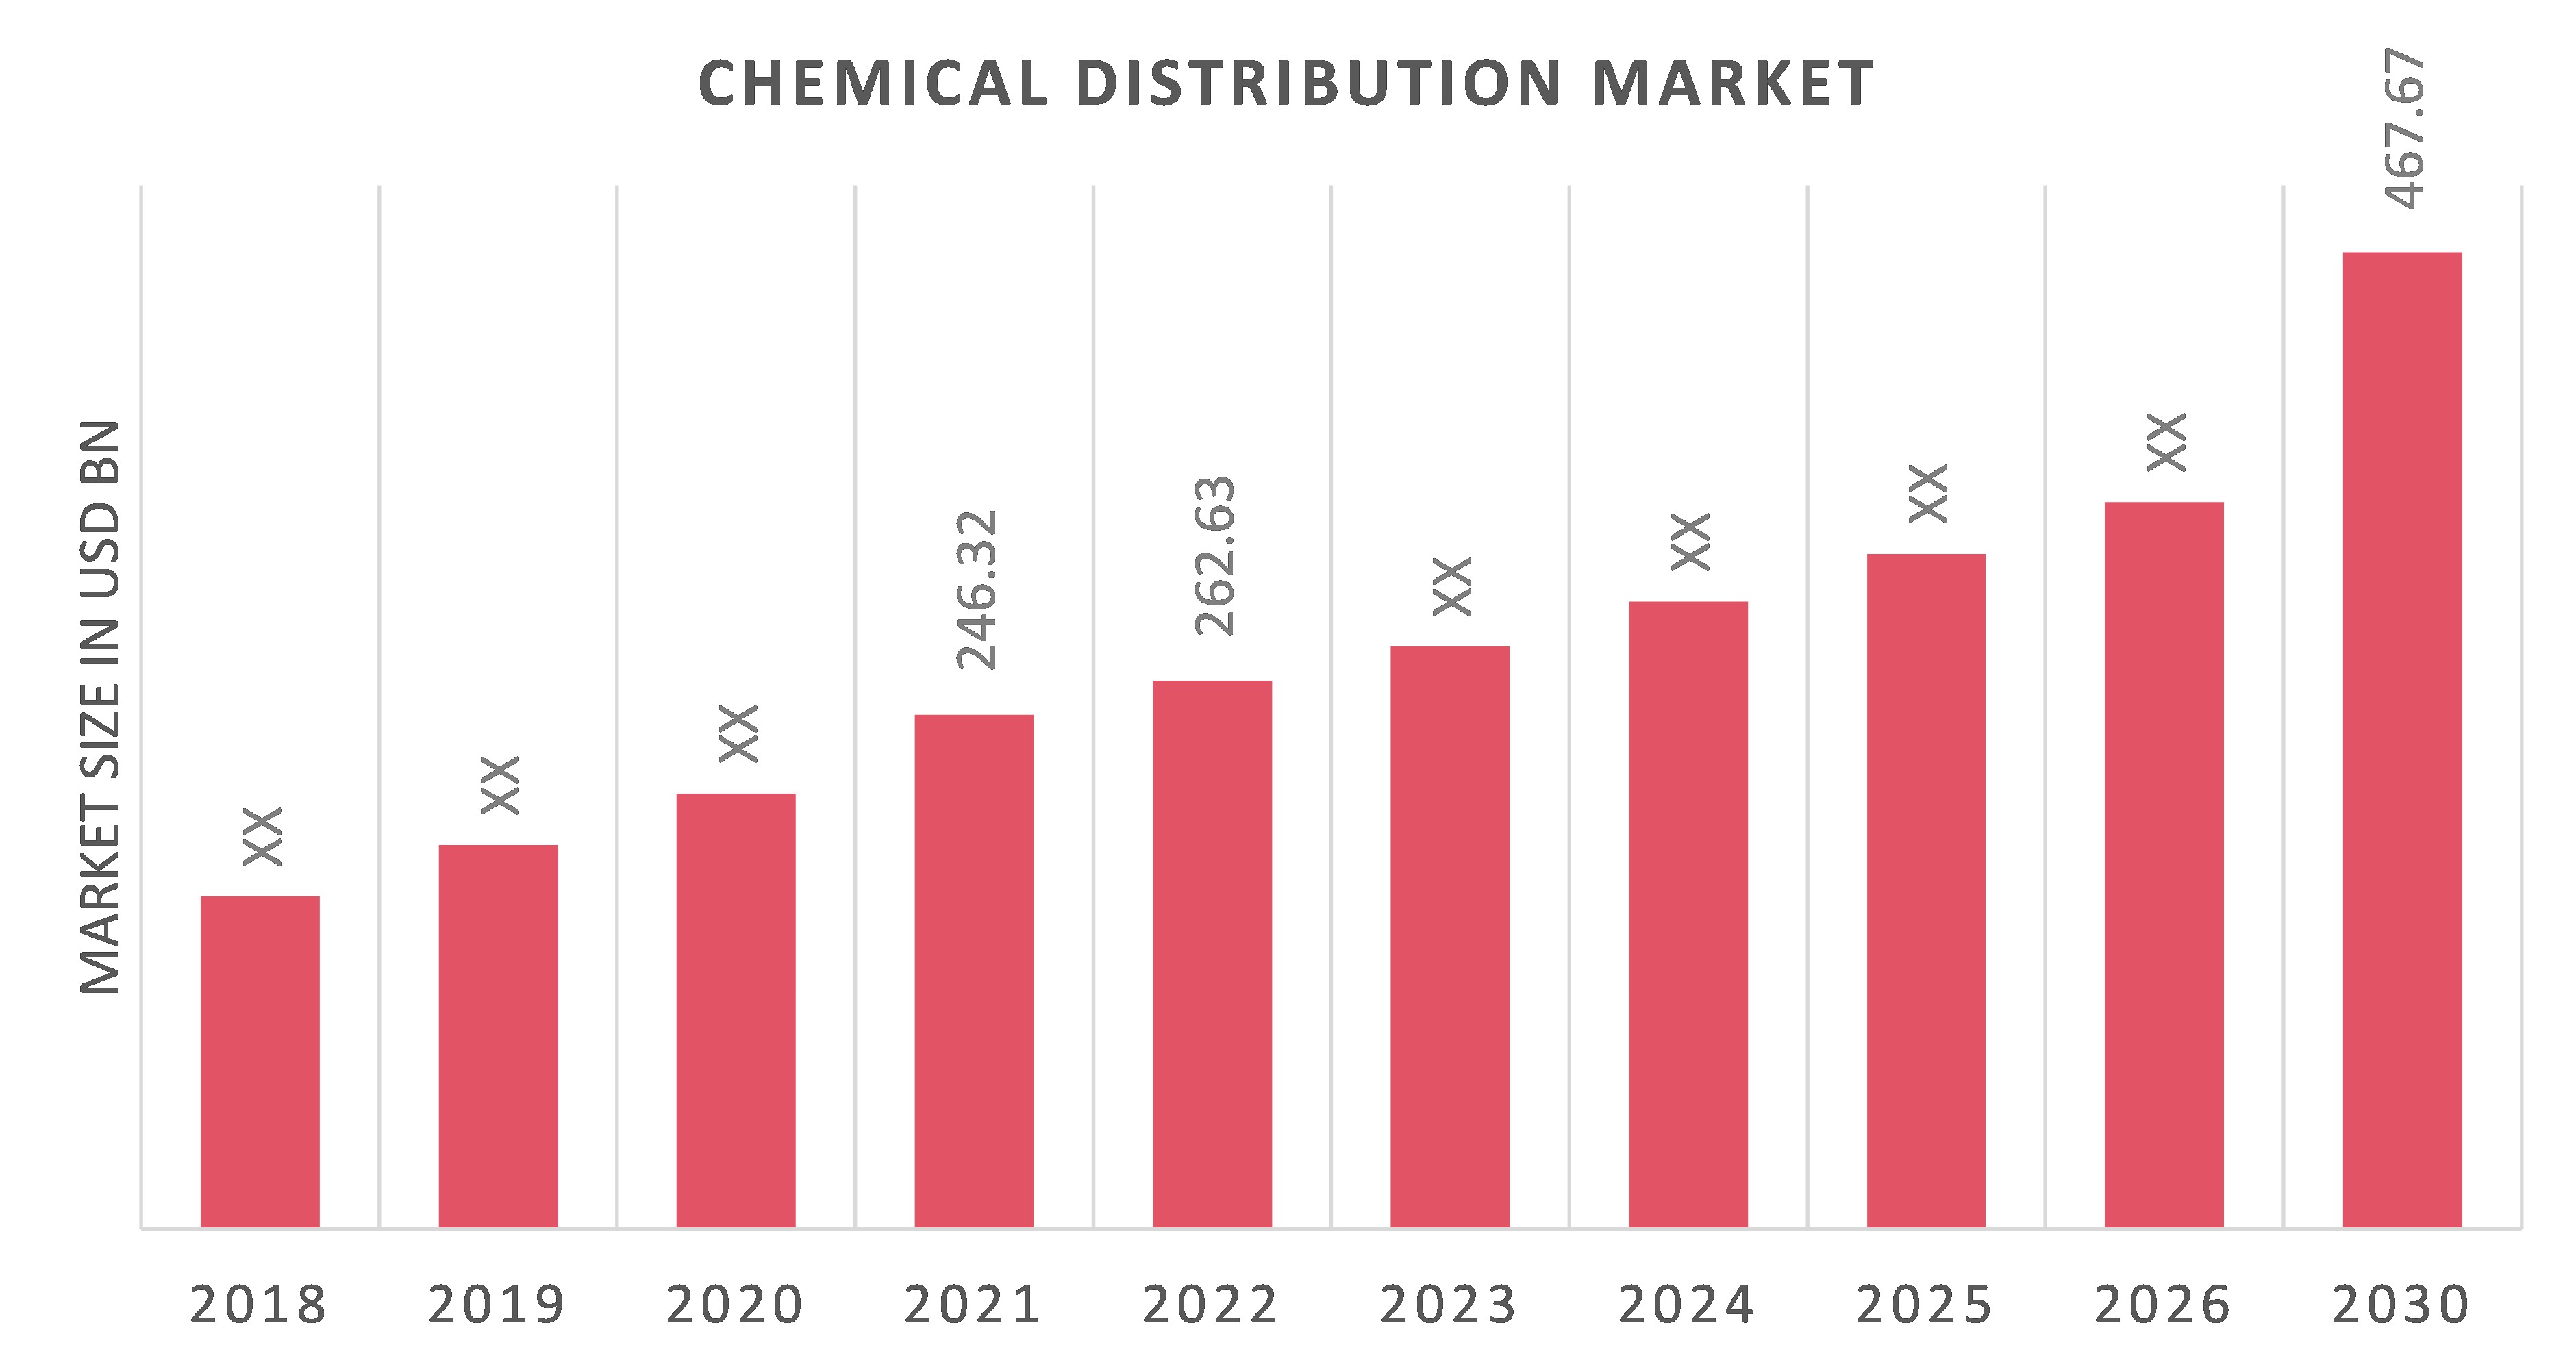 Global Chemical Distribution Market